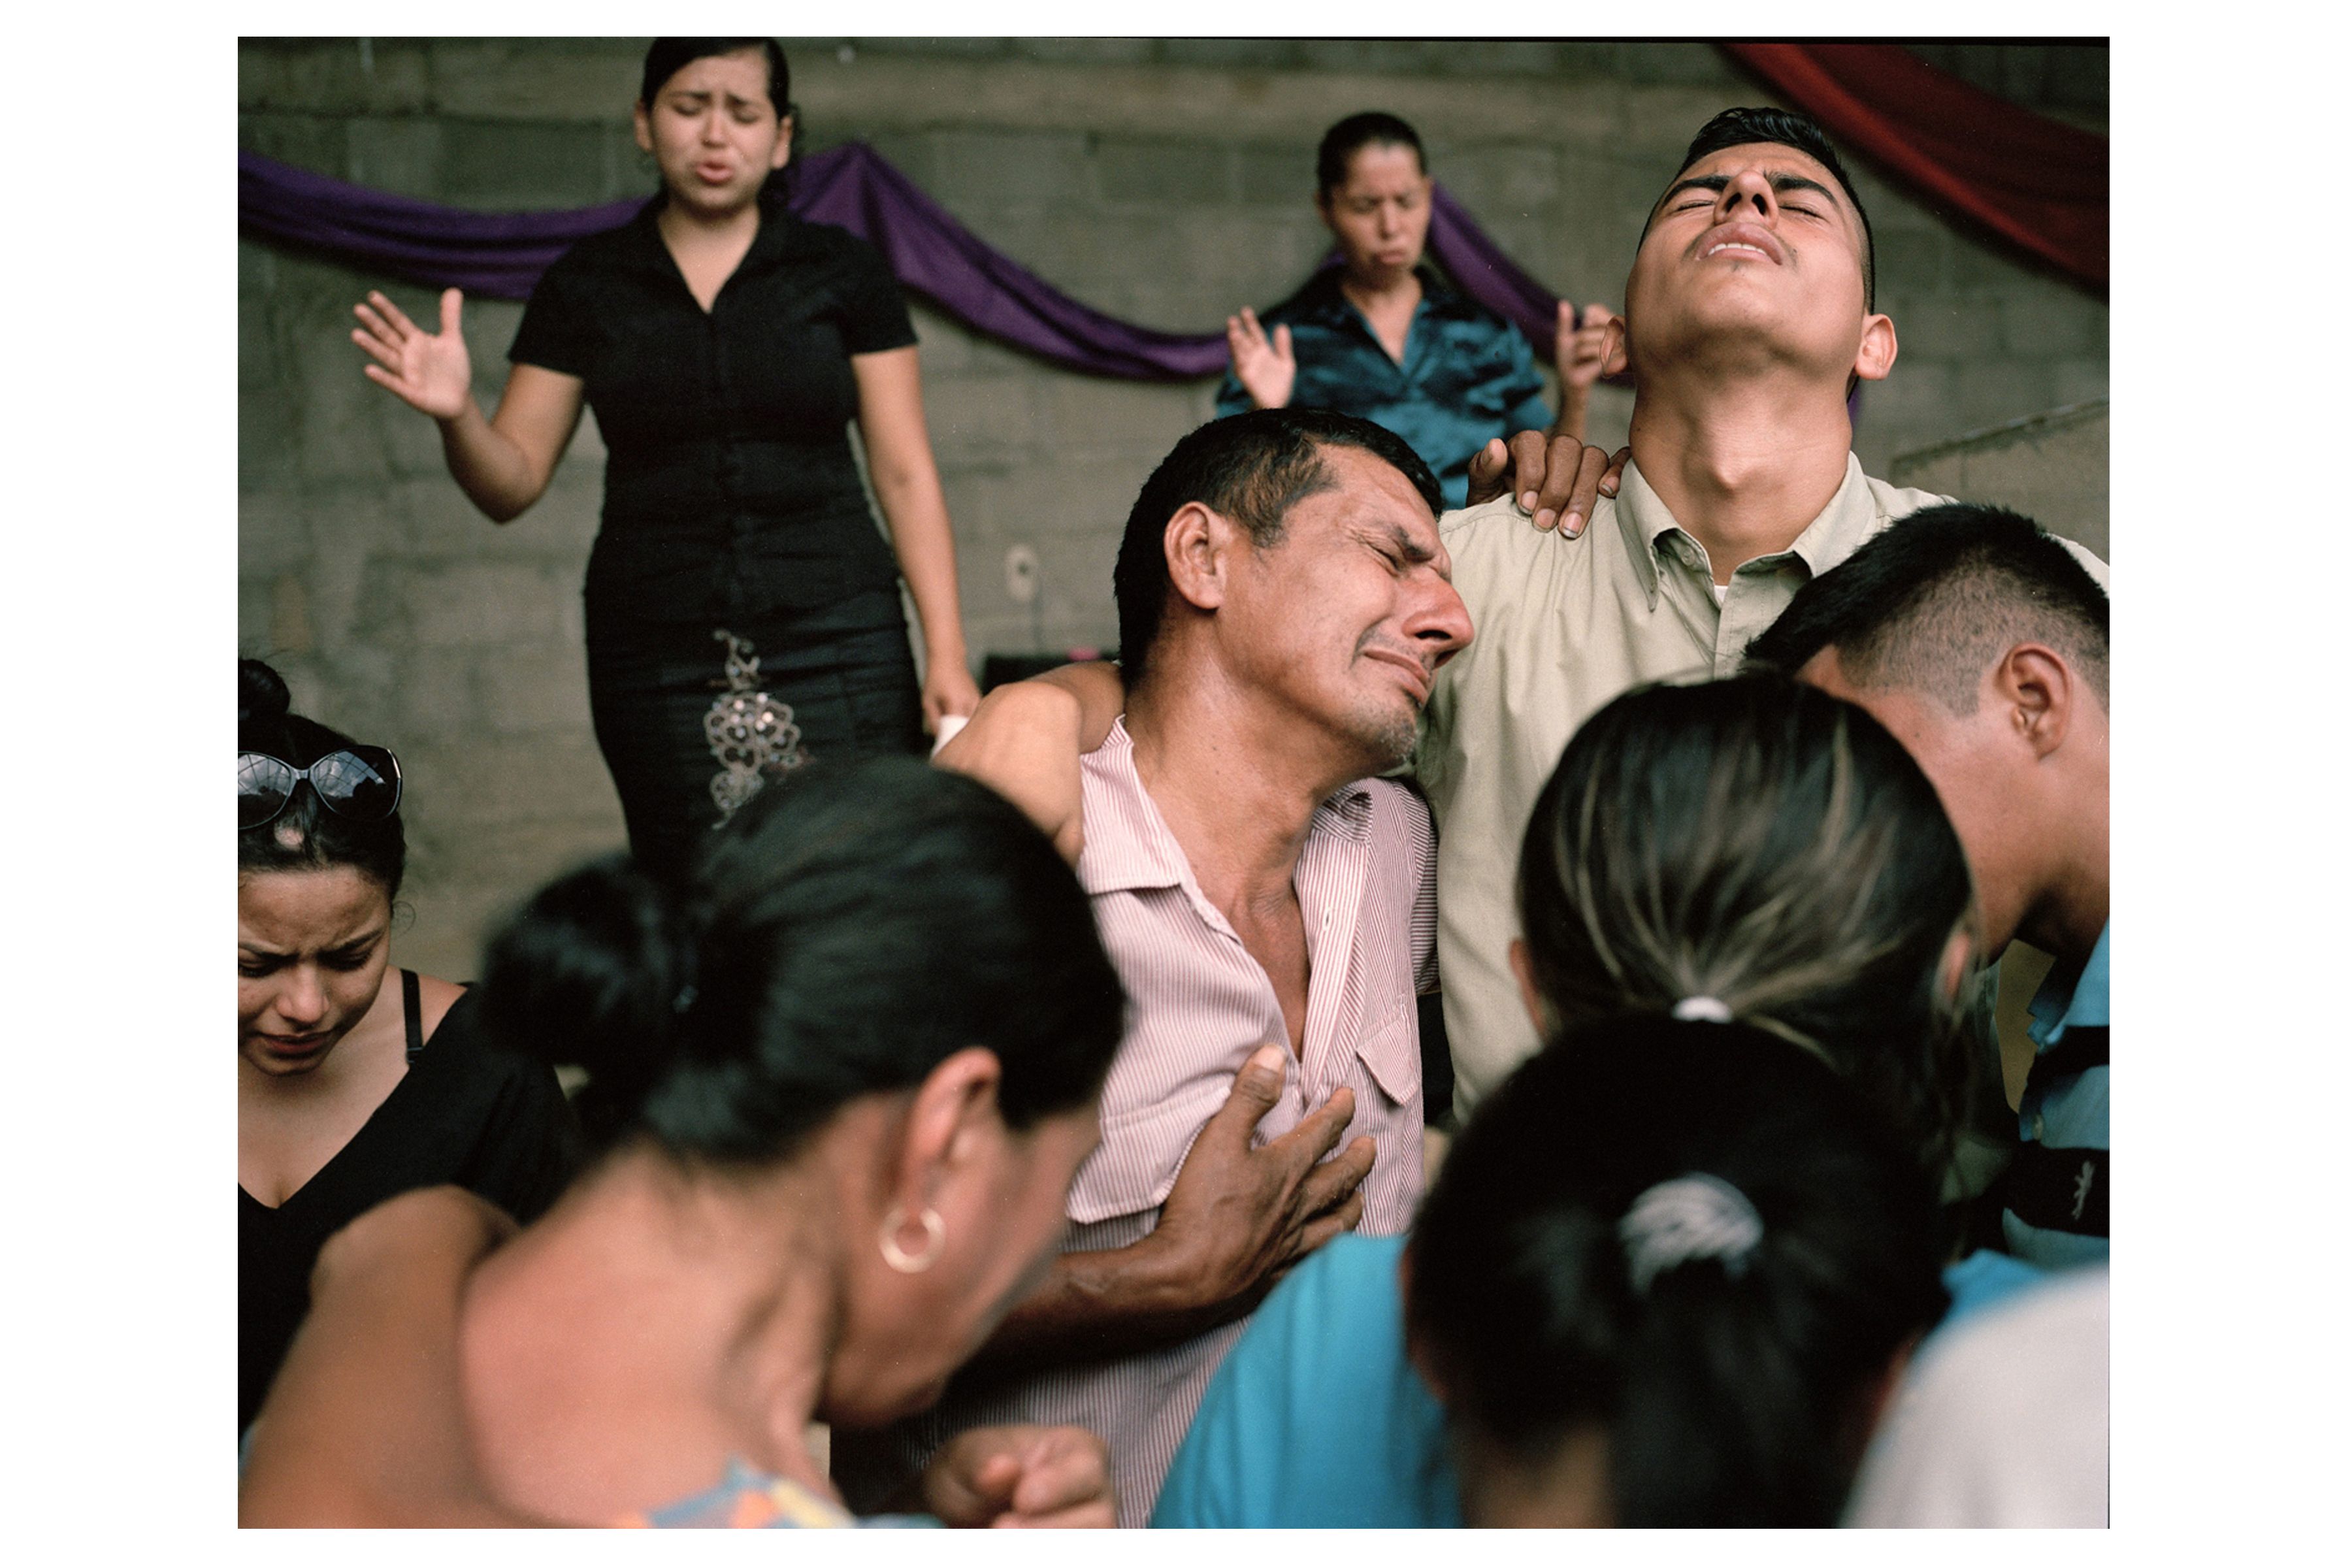 Image by Dominic Bracco II. Honduras, 2013.